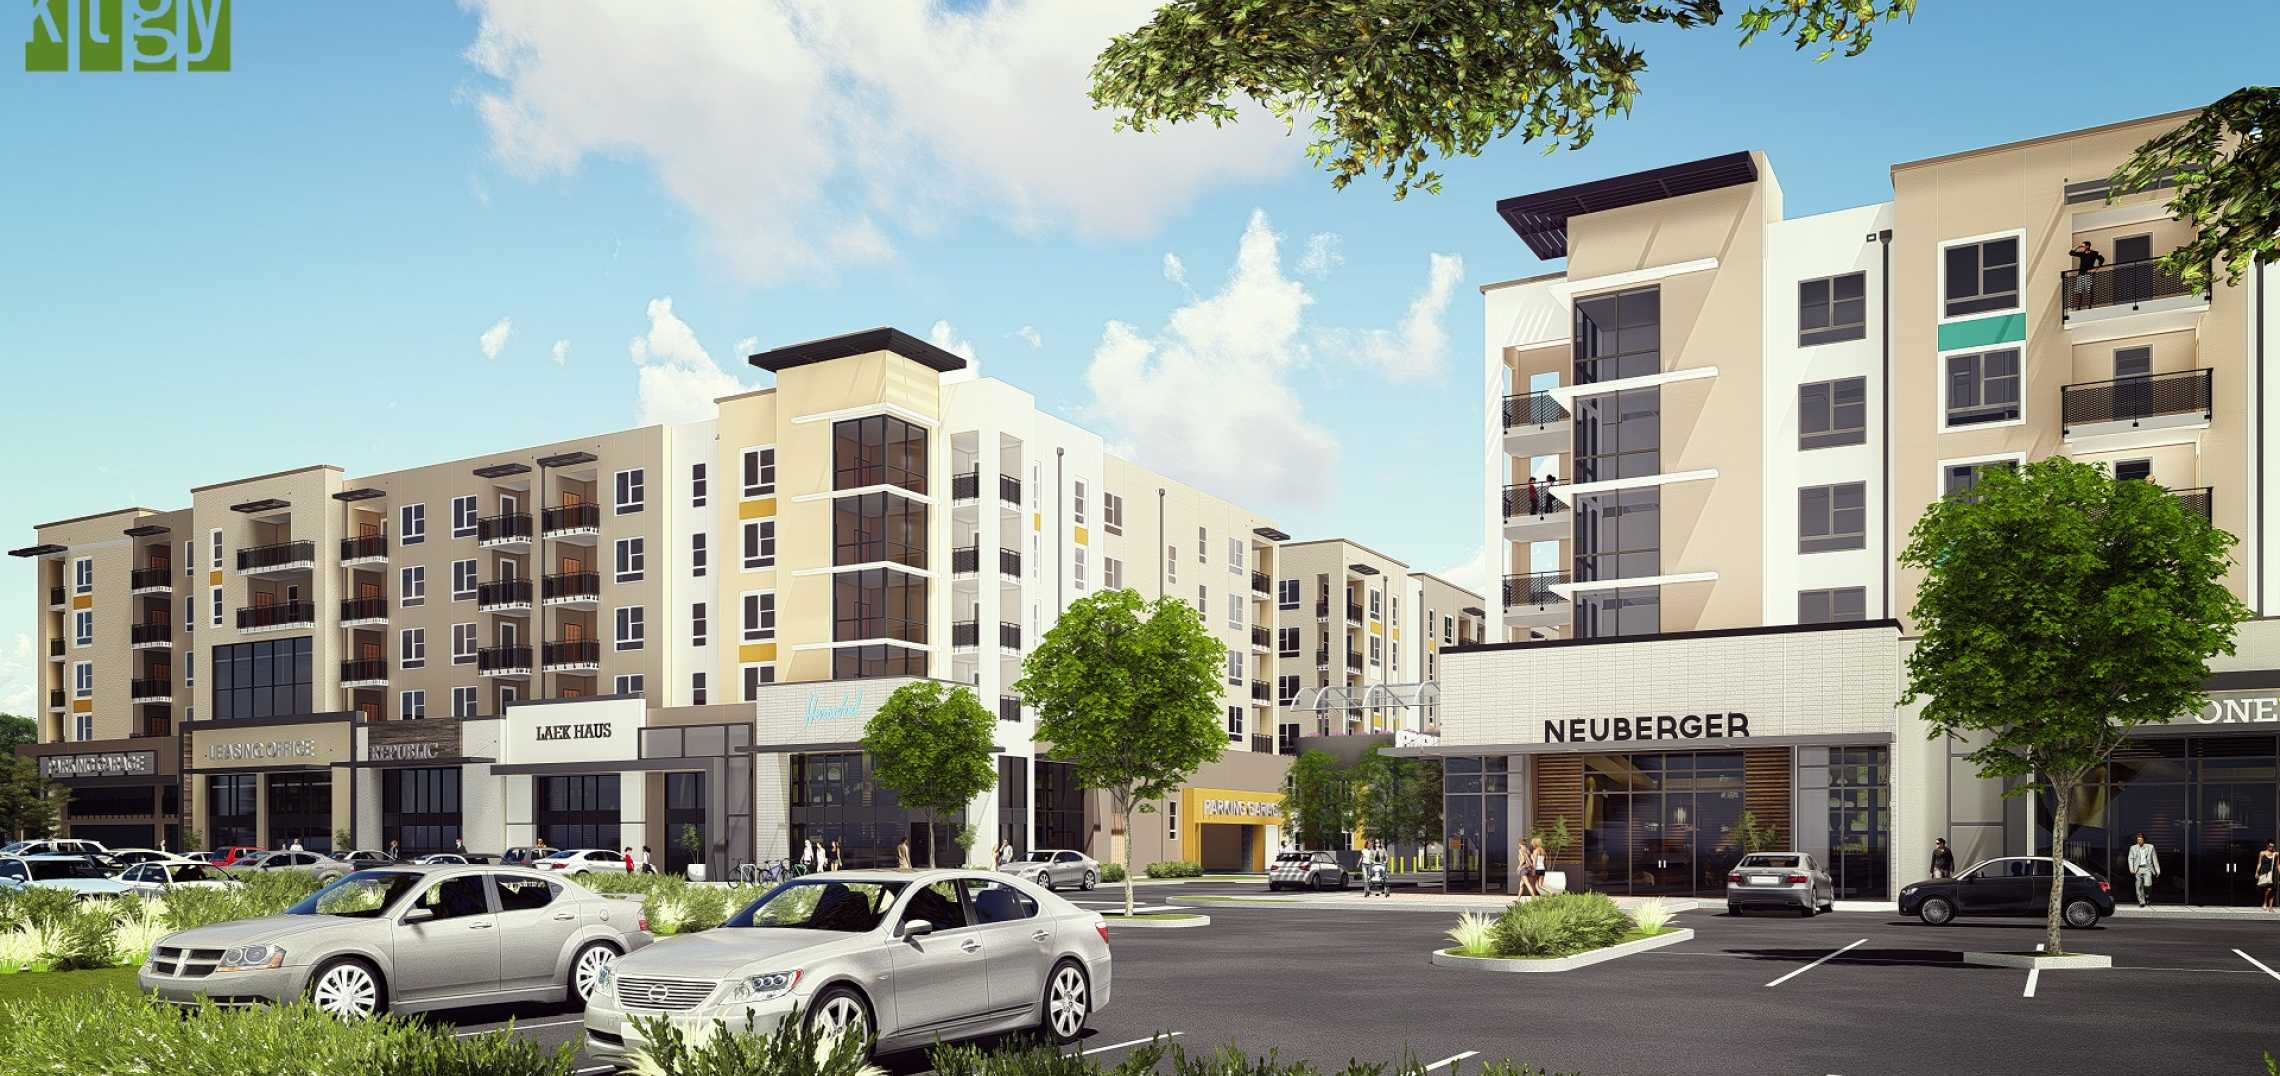 429 Apartments and Retail Rise Near Northridge Fashion Center Urbanize LA